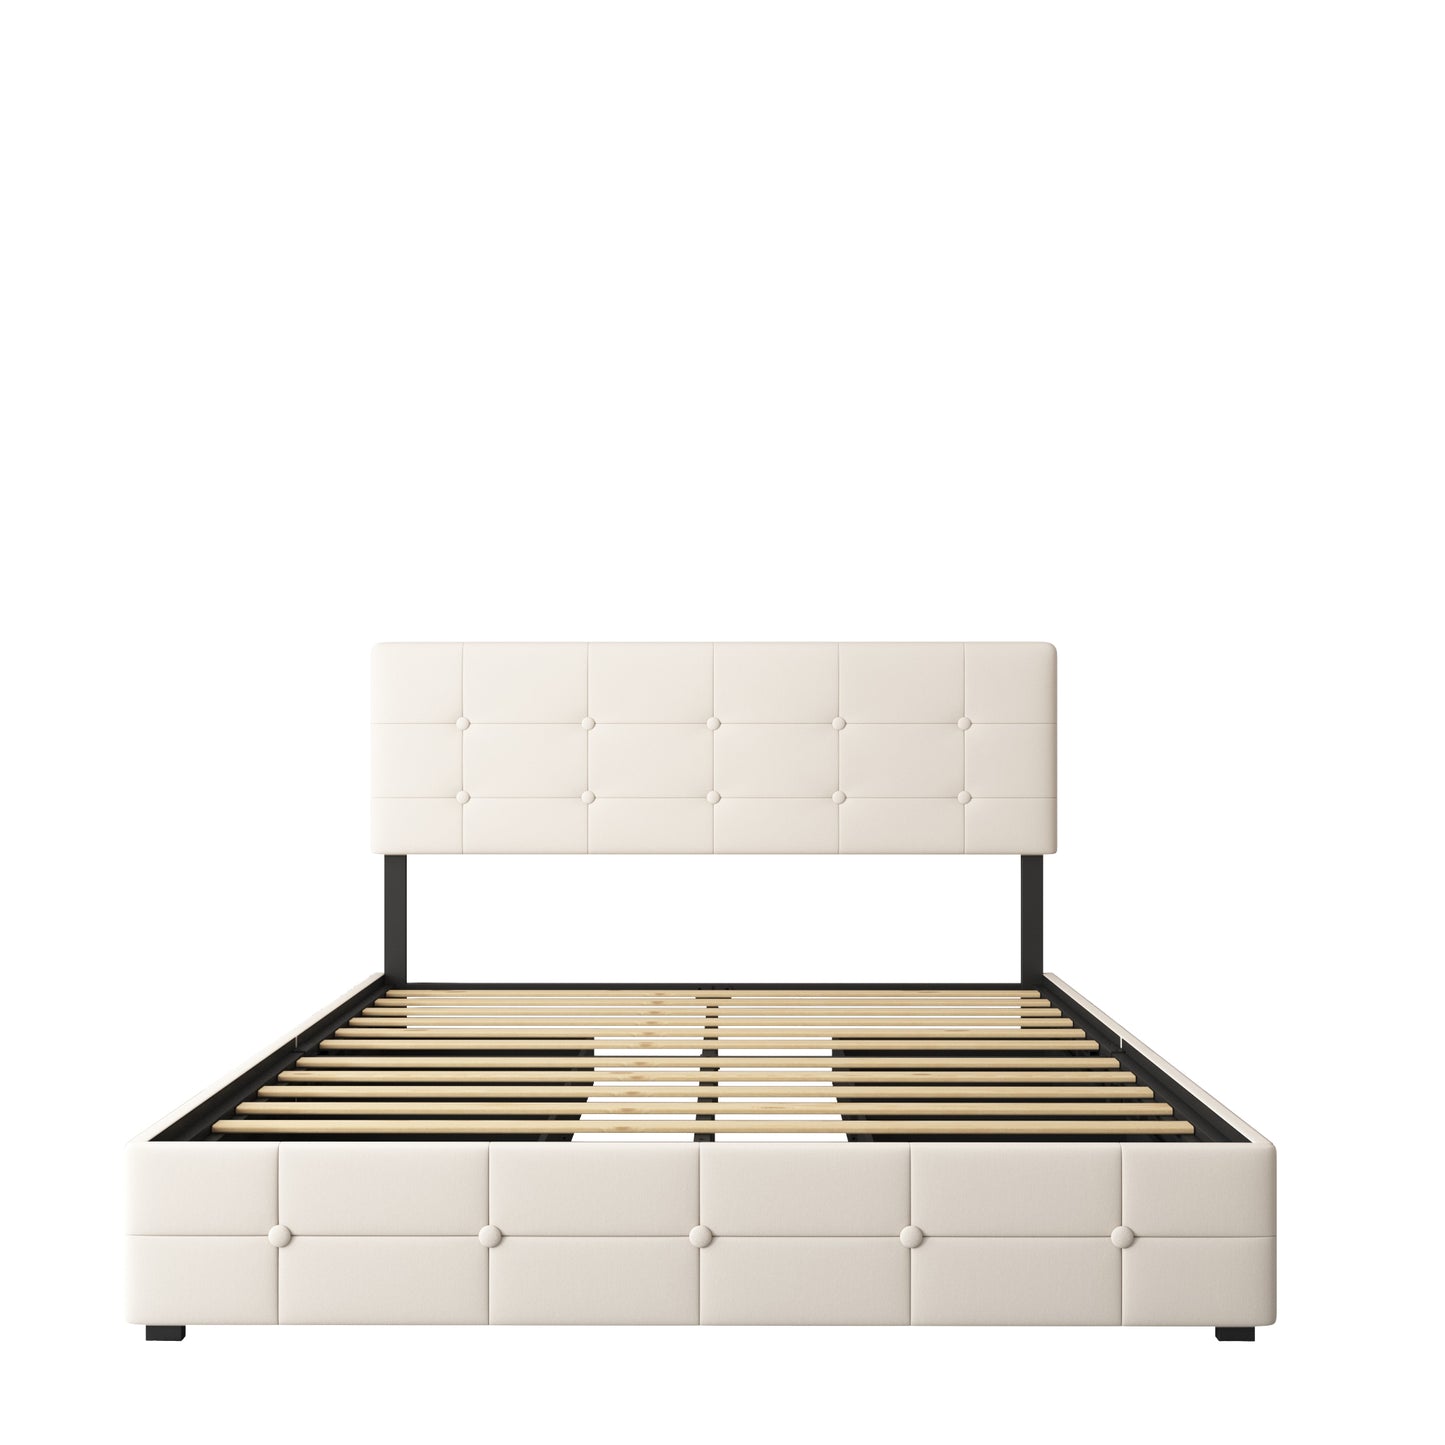 SYNGAR Queen Size Platform Bed Frame with 4 Drawers, Modern Button Tufted Velvet Upholstered, Adjustable Headboard, Beige